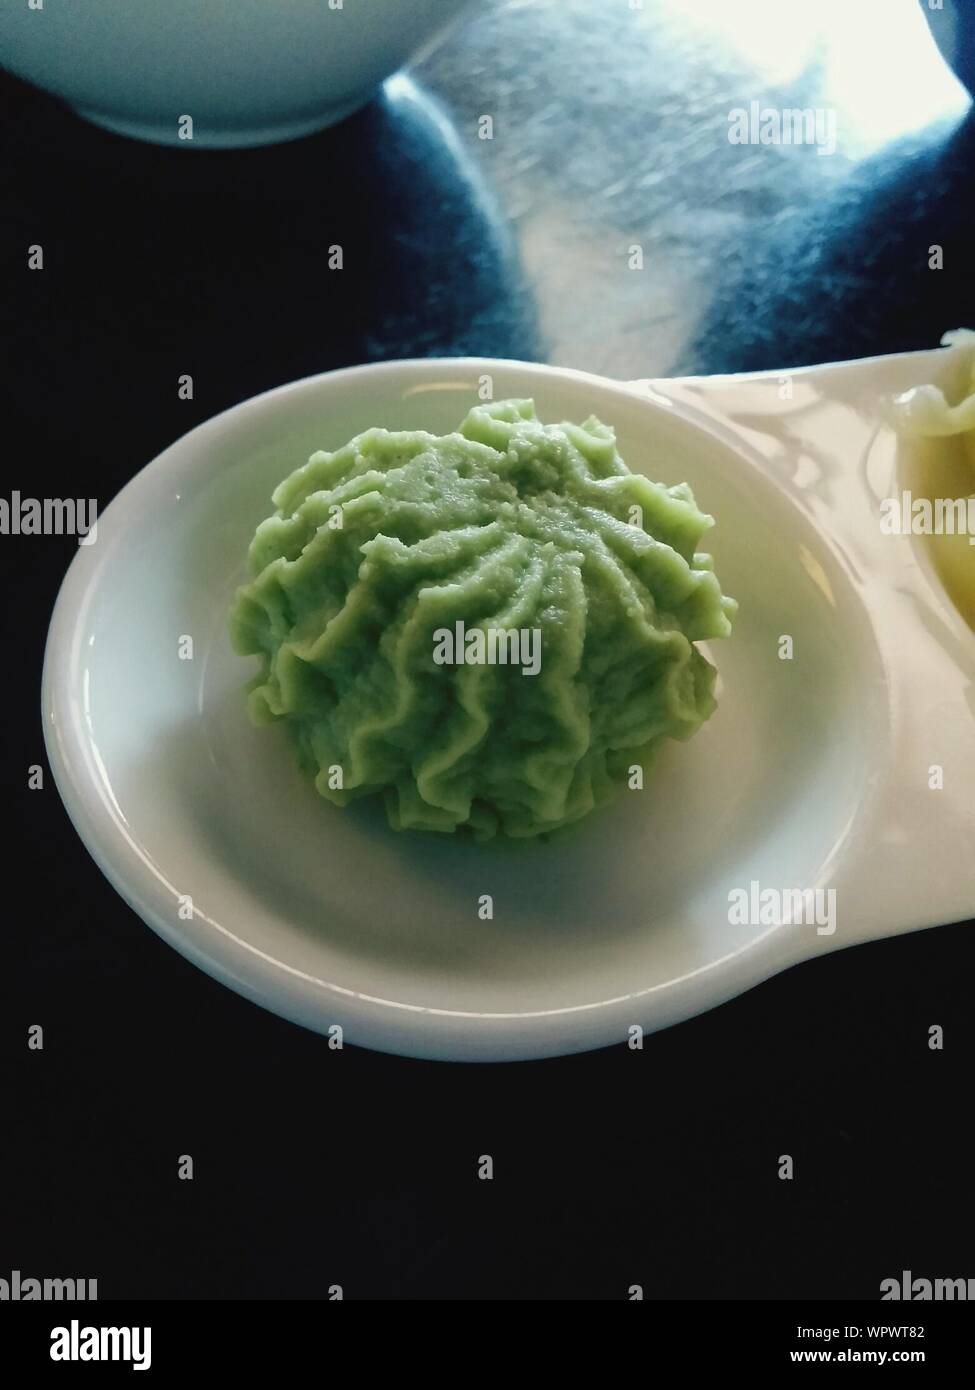 Green Ice Cream On Plate Stock Photo